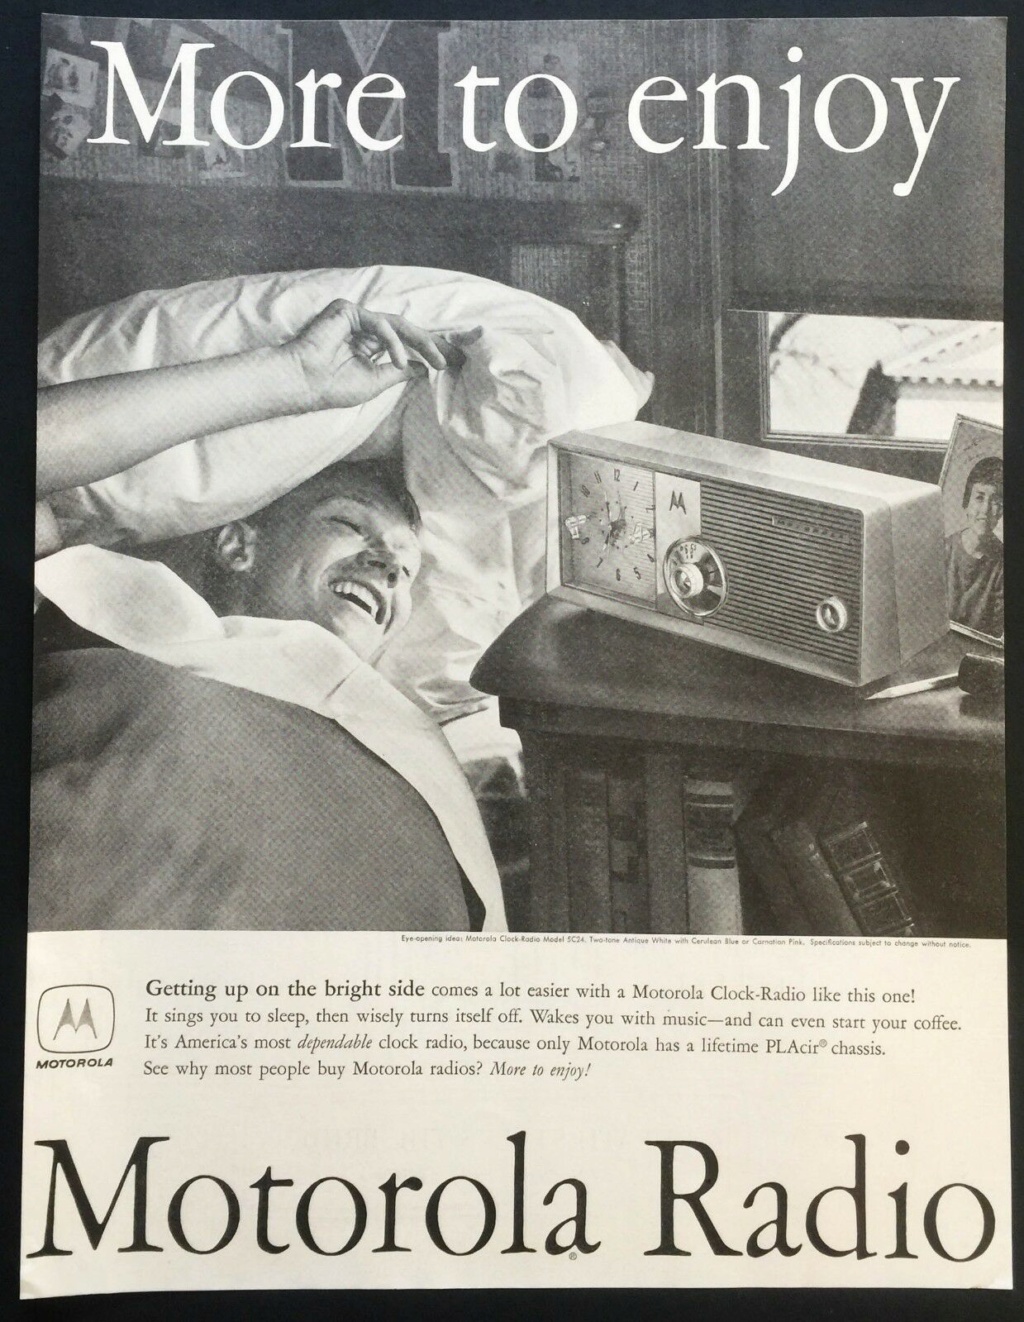 Motorola Radio & Television vintage ads - publicités années 50 Motorola Motoro20